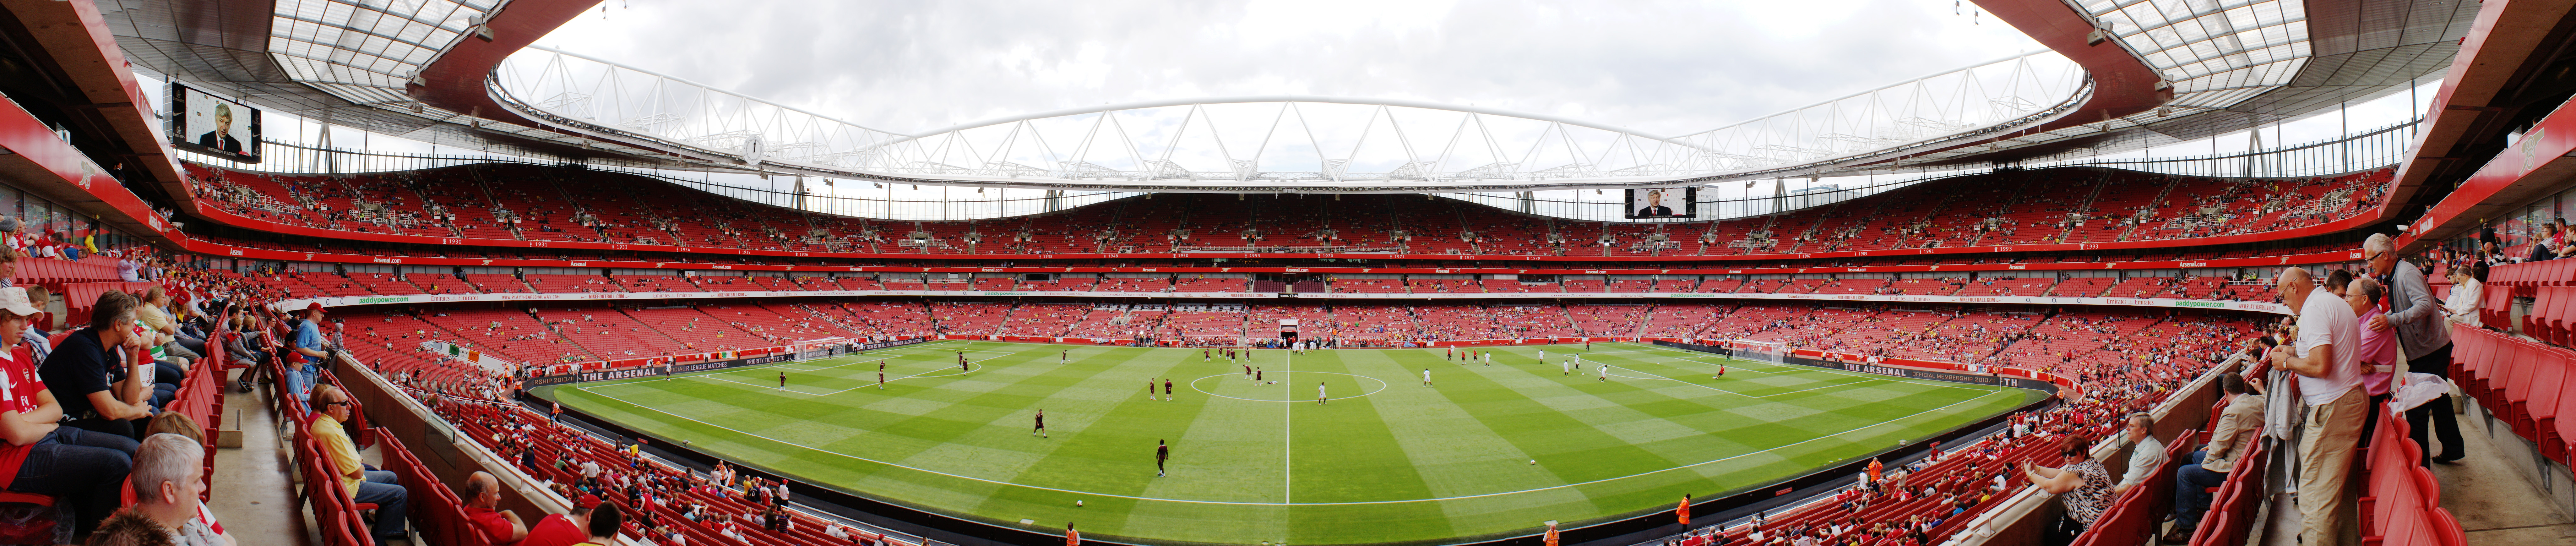 Arsenal Emirates Stadium Wallpaper For Facebook | Full HD Pictures